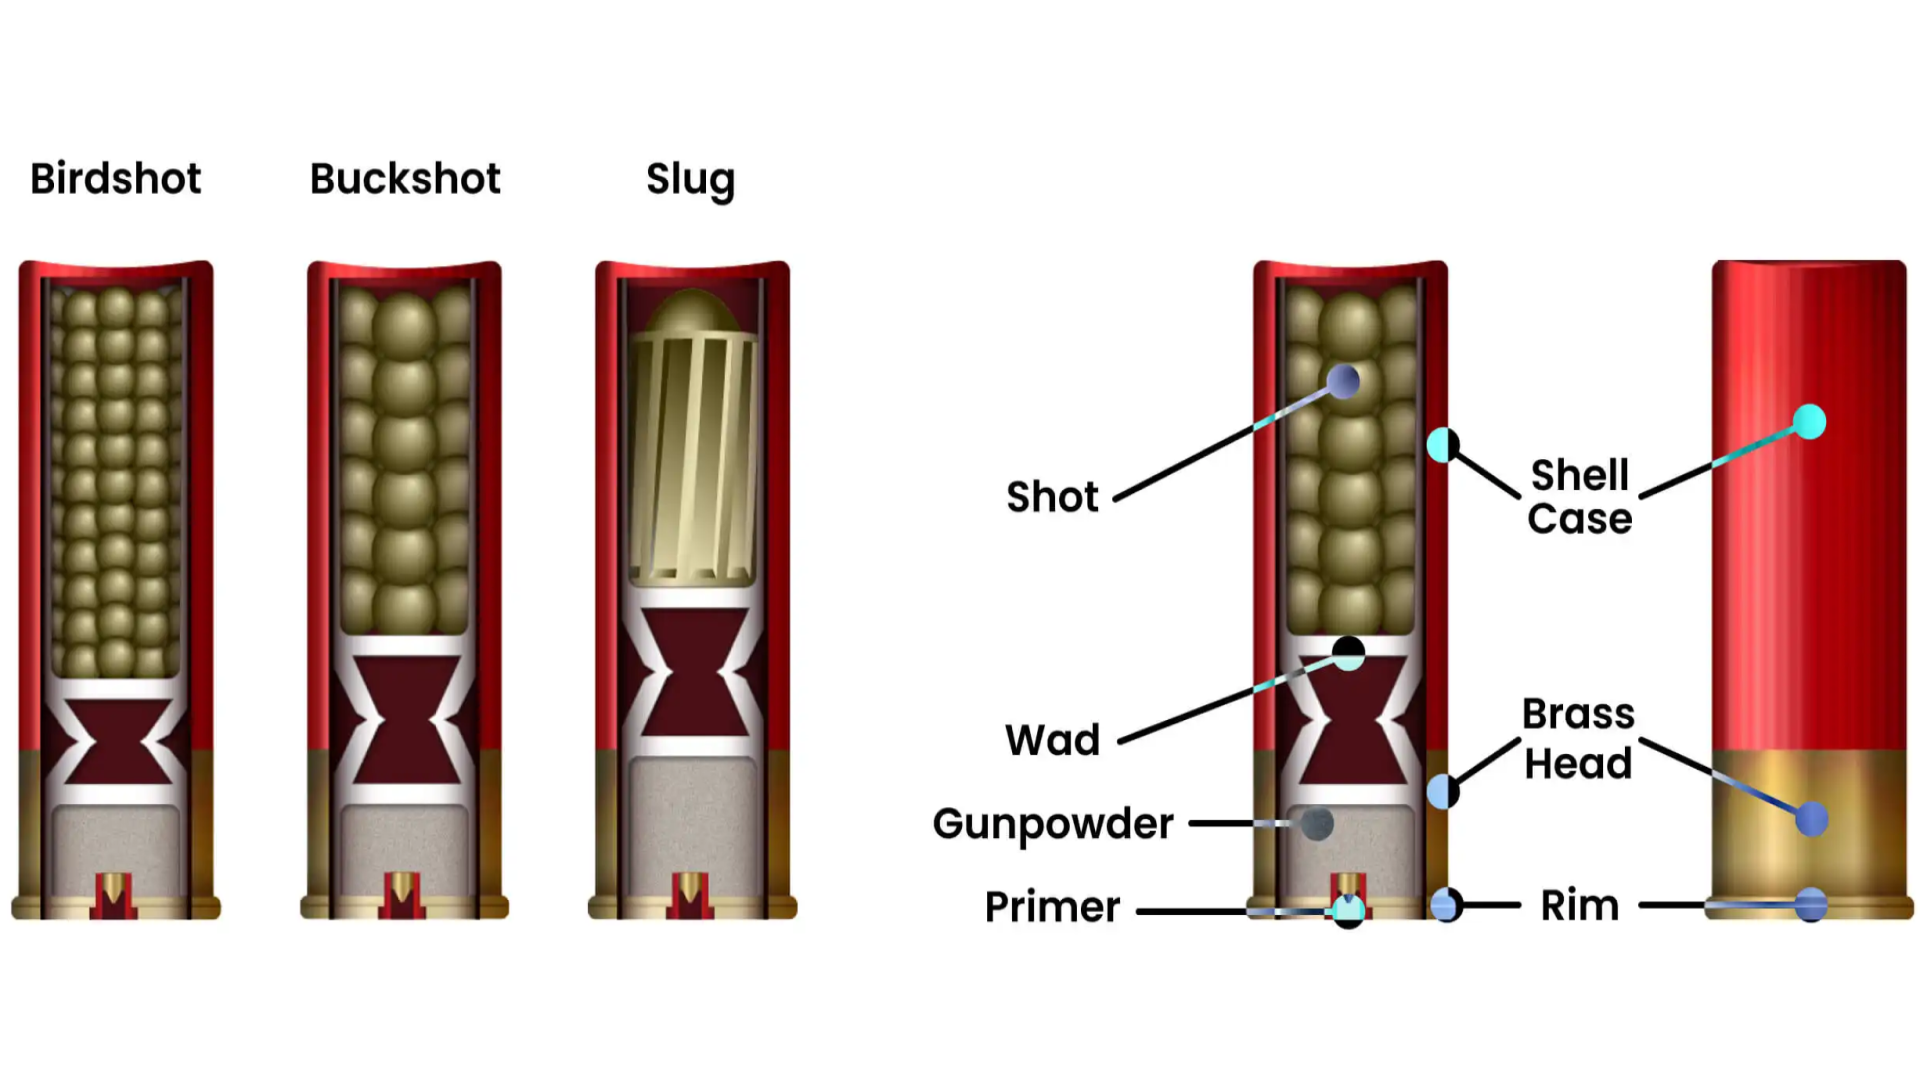 Steel shot - will my shotgun be safe with steel shot cartridges?